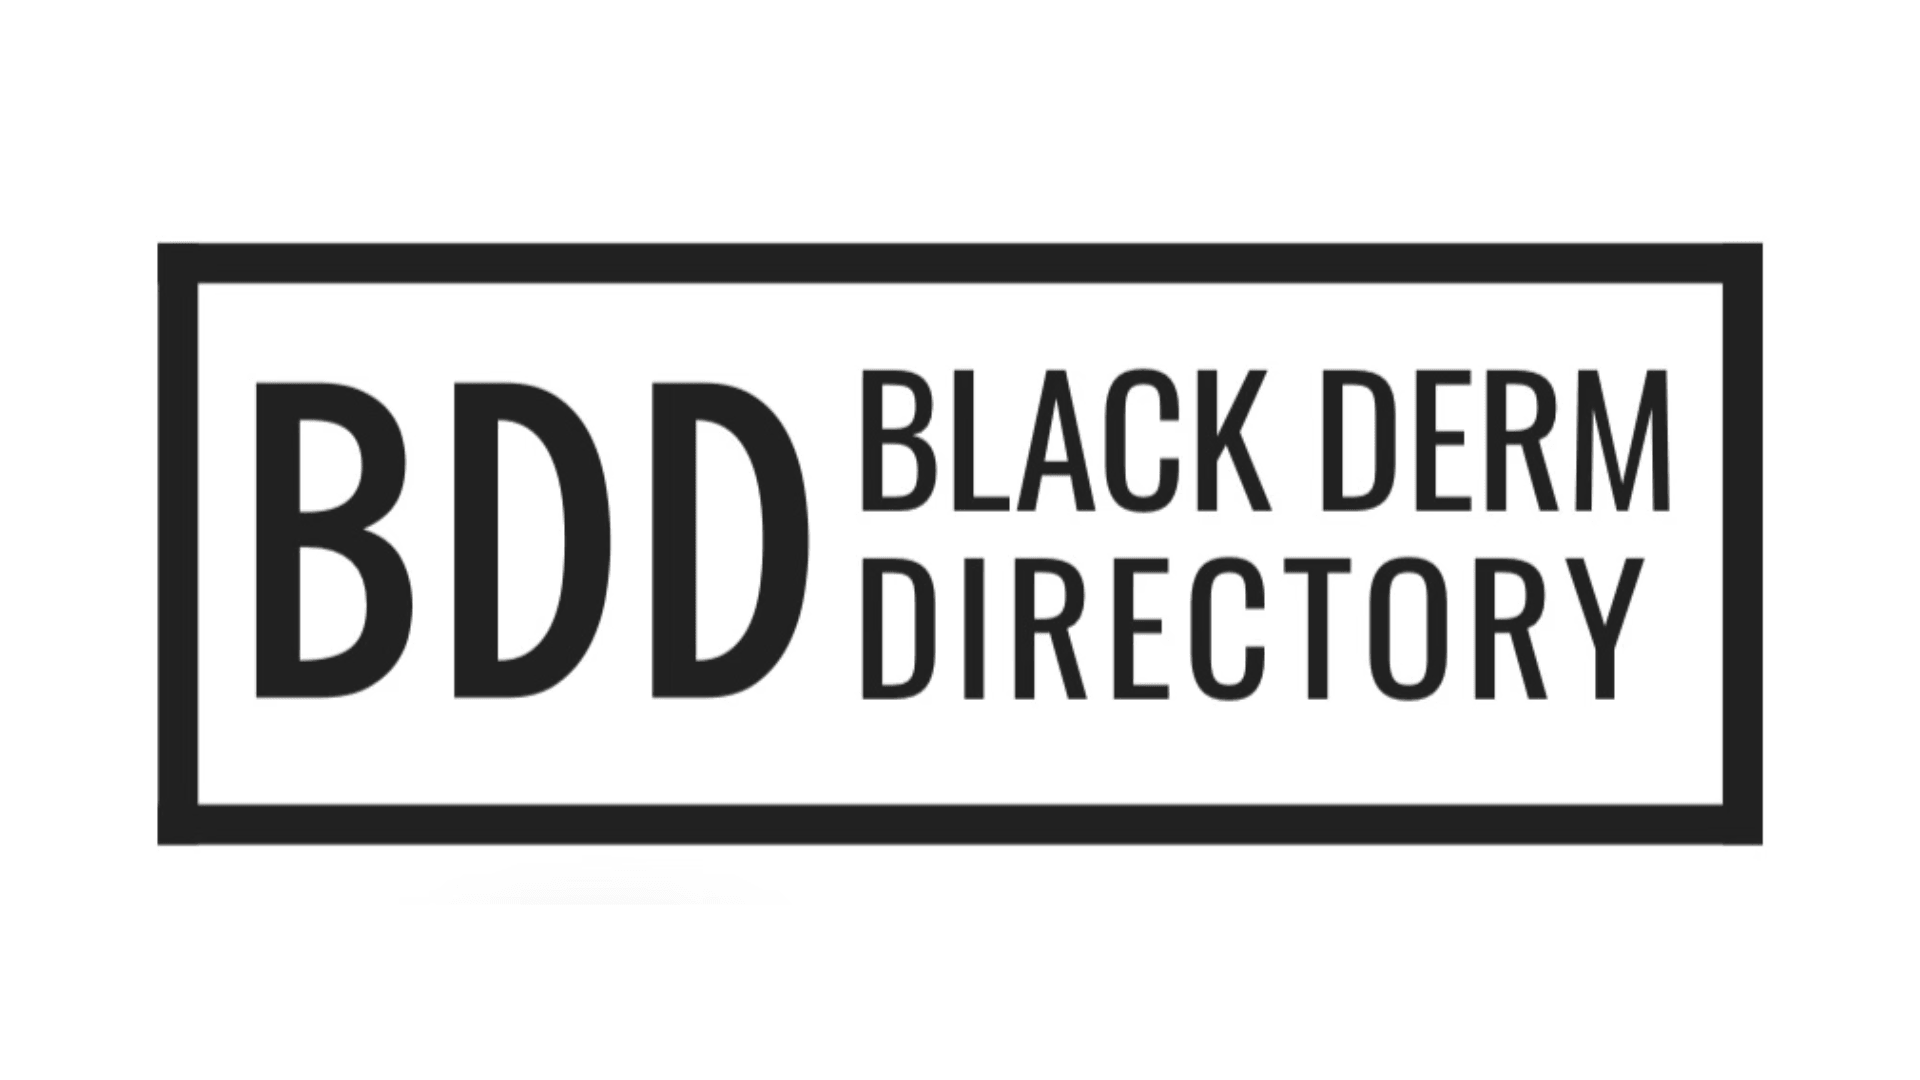 Black Derm Directory